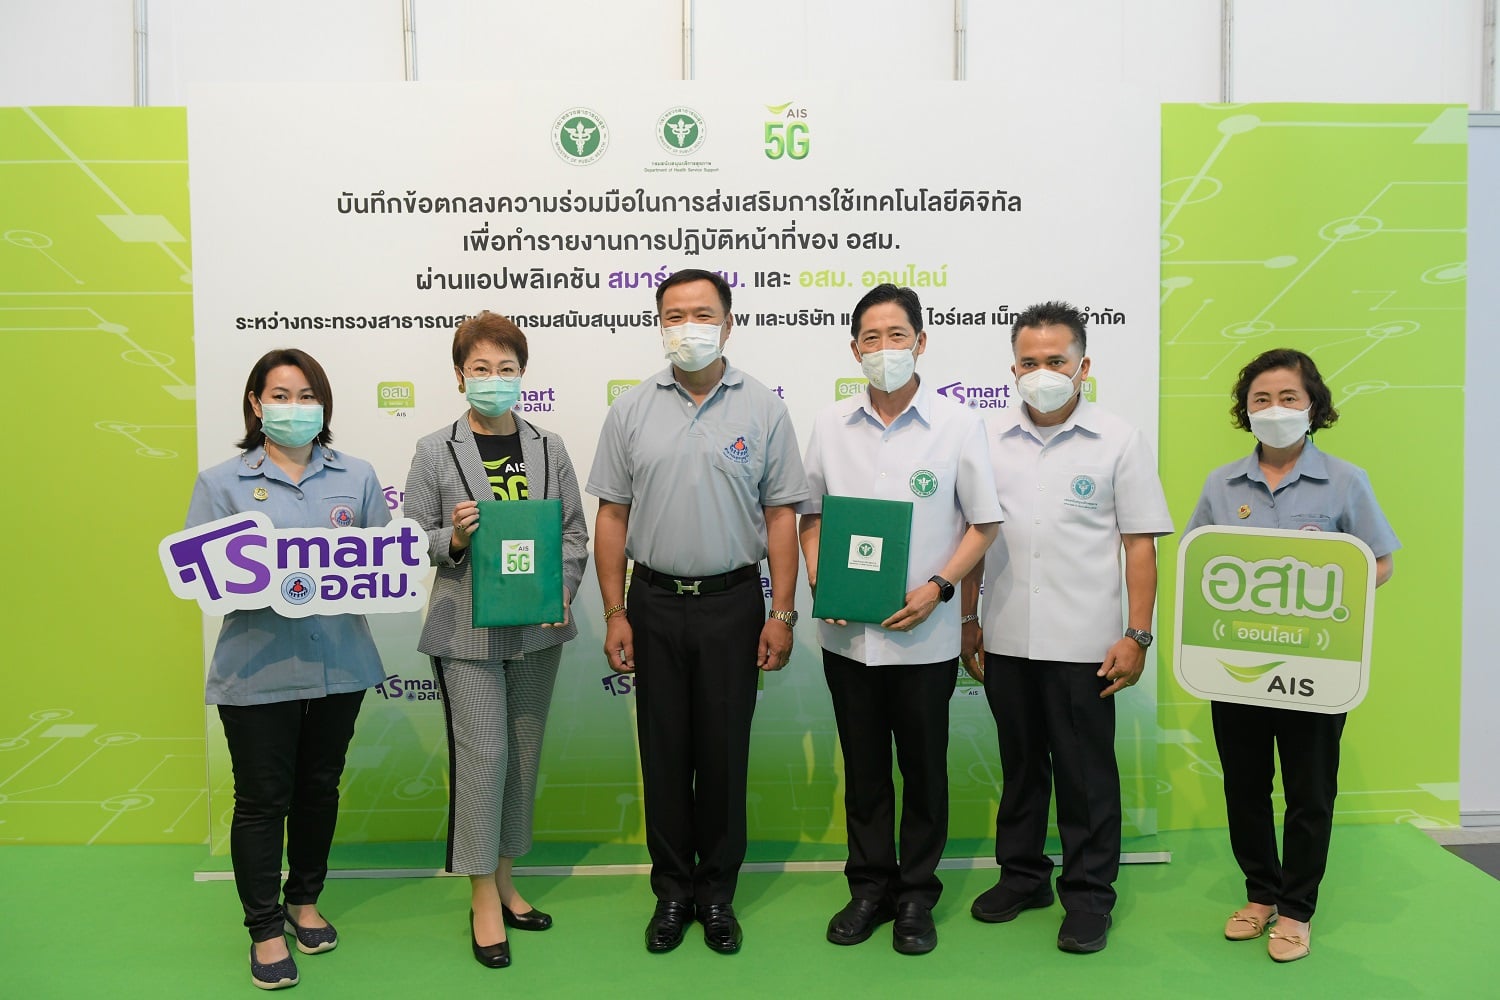 AIS ร่วมเชิดชู “อสม.นักรบเสื้อเทา” ชูเป็นด่านหน้าสุดแกร่งเพื่อสุขภาพคนไทย เดินหน้ายกระดับแอป อสม.ออนไลน์ สู่เครื่องมือช่วยพิทักษ์คนไทยอย่างเป็นทางการ